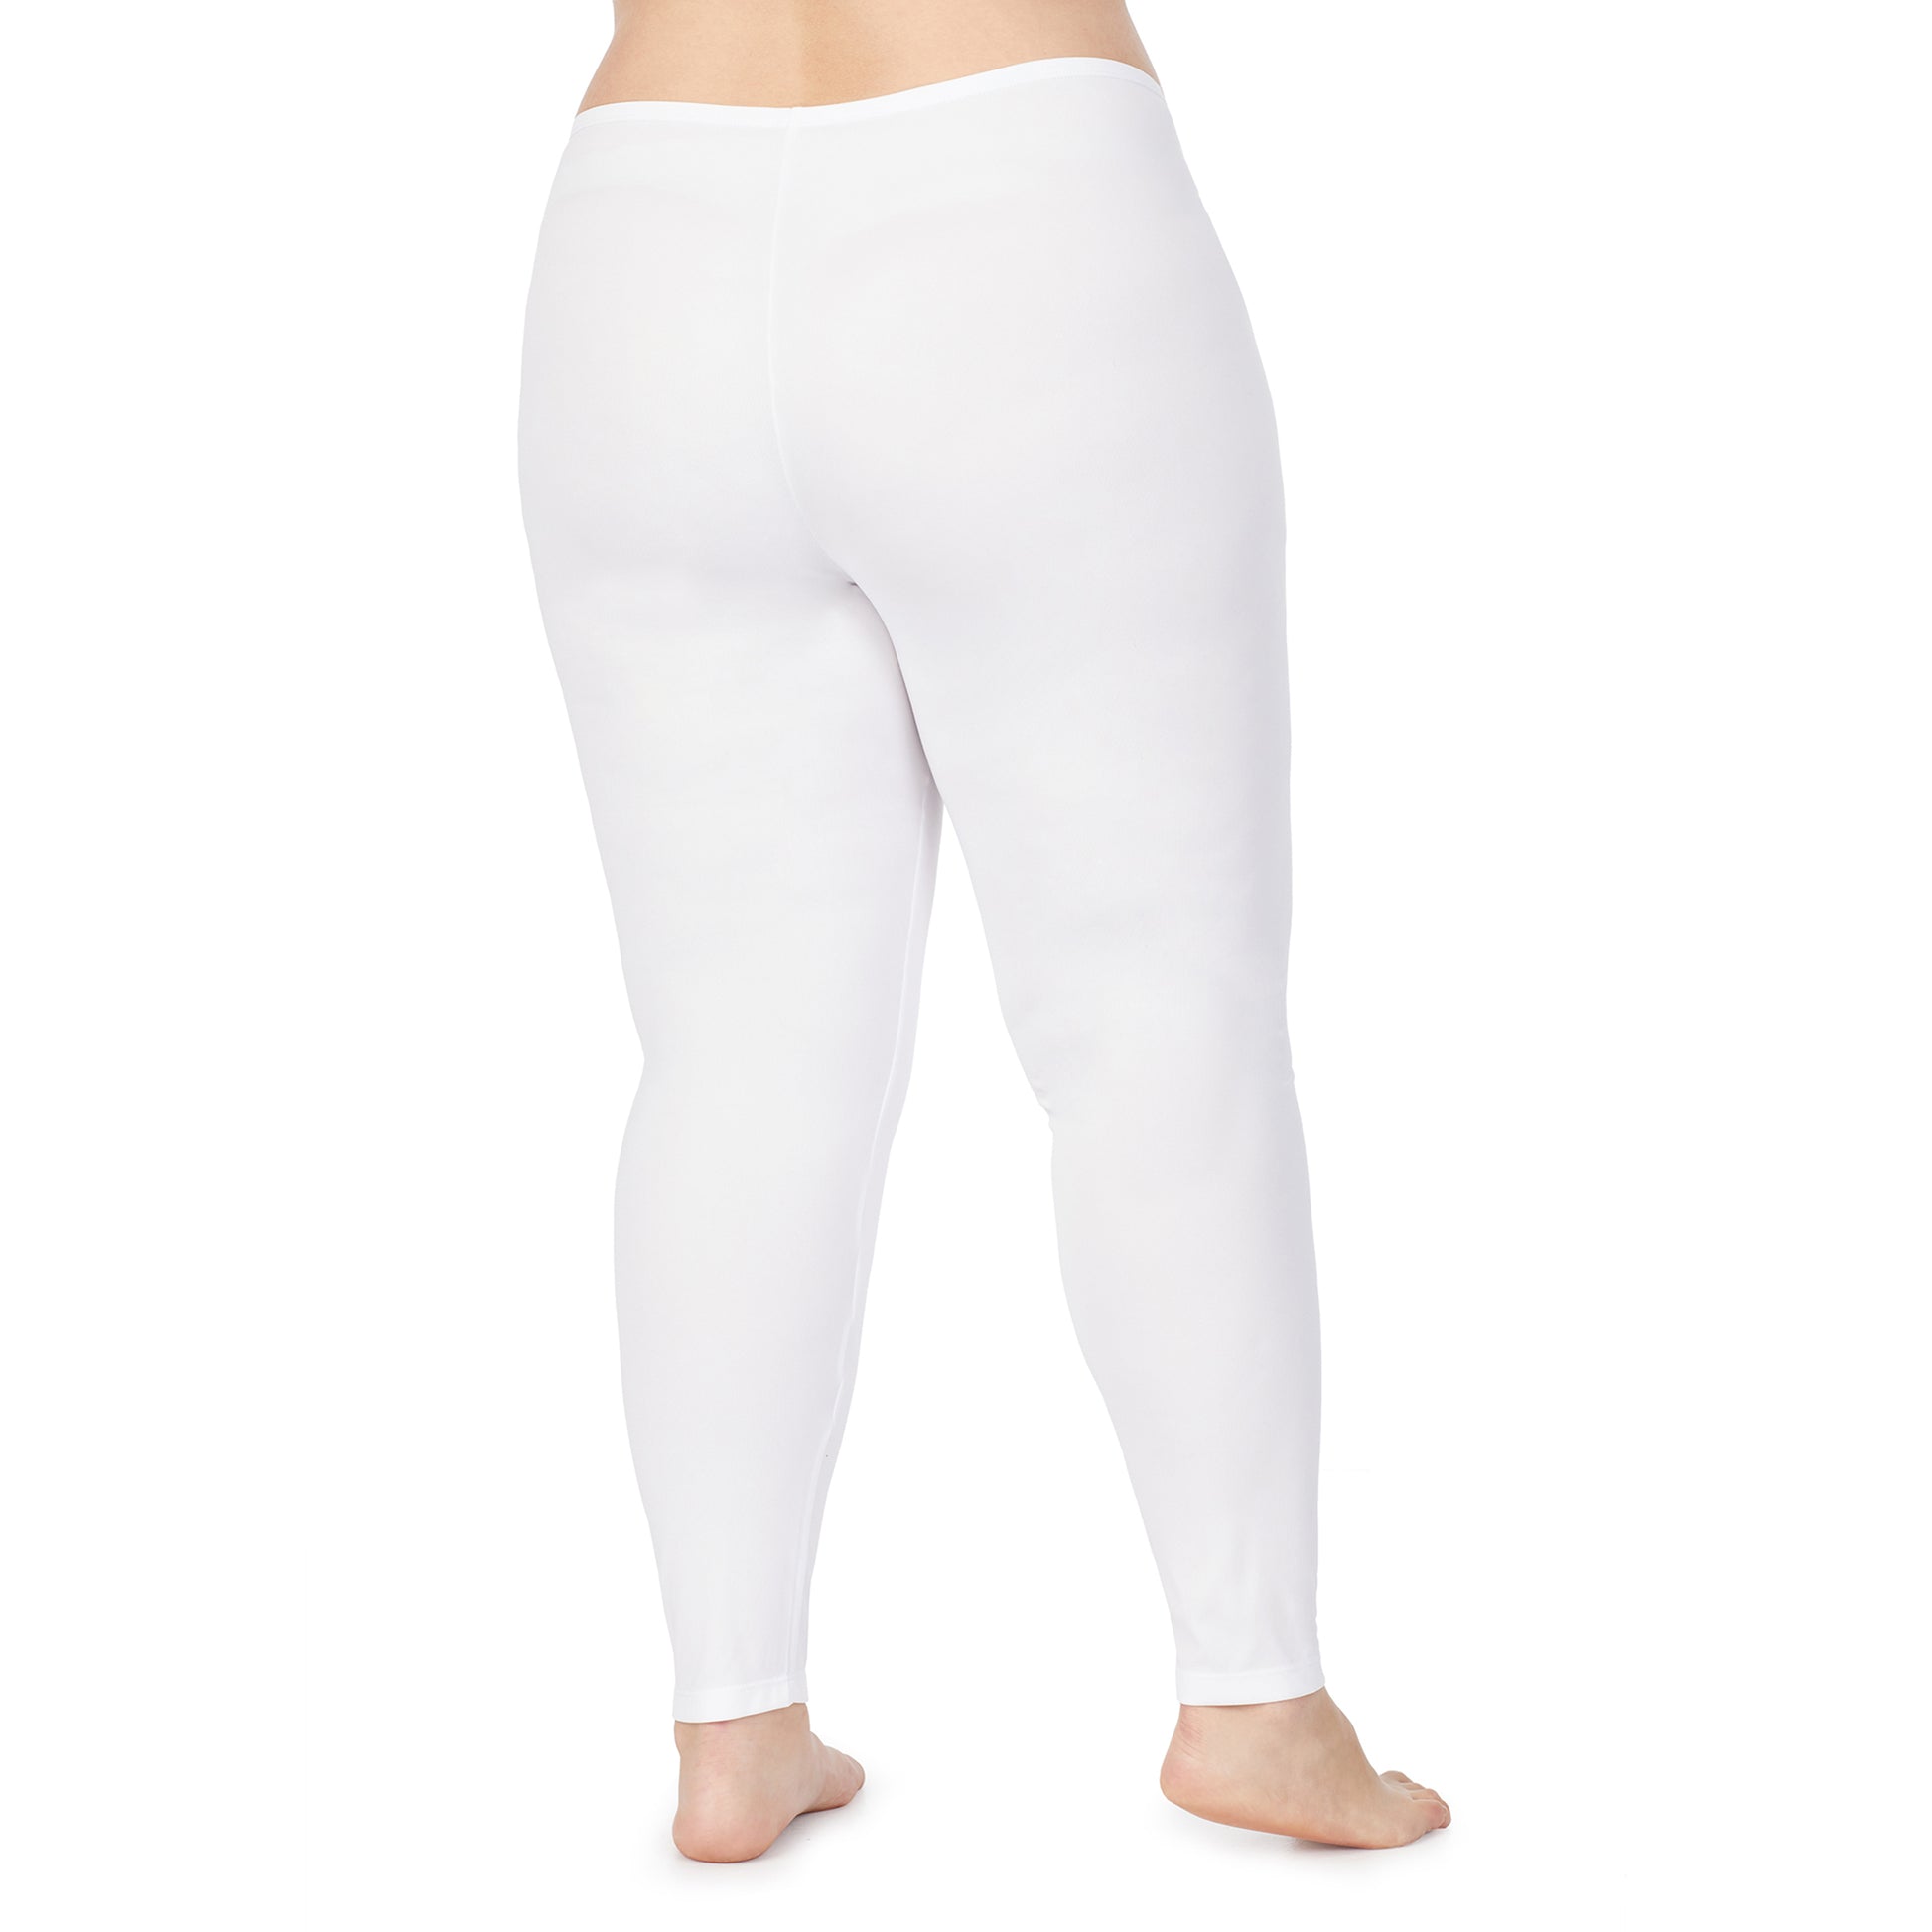 White; Model is wearing size 1X. She is 5'9", Bust 38", Waist 36", Hips 48.5".@lower body of A model wearing white legging